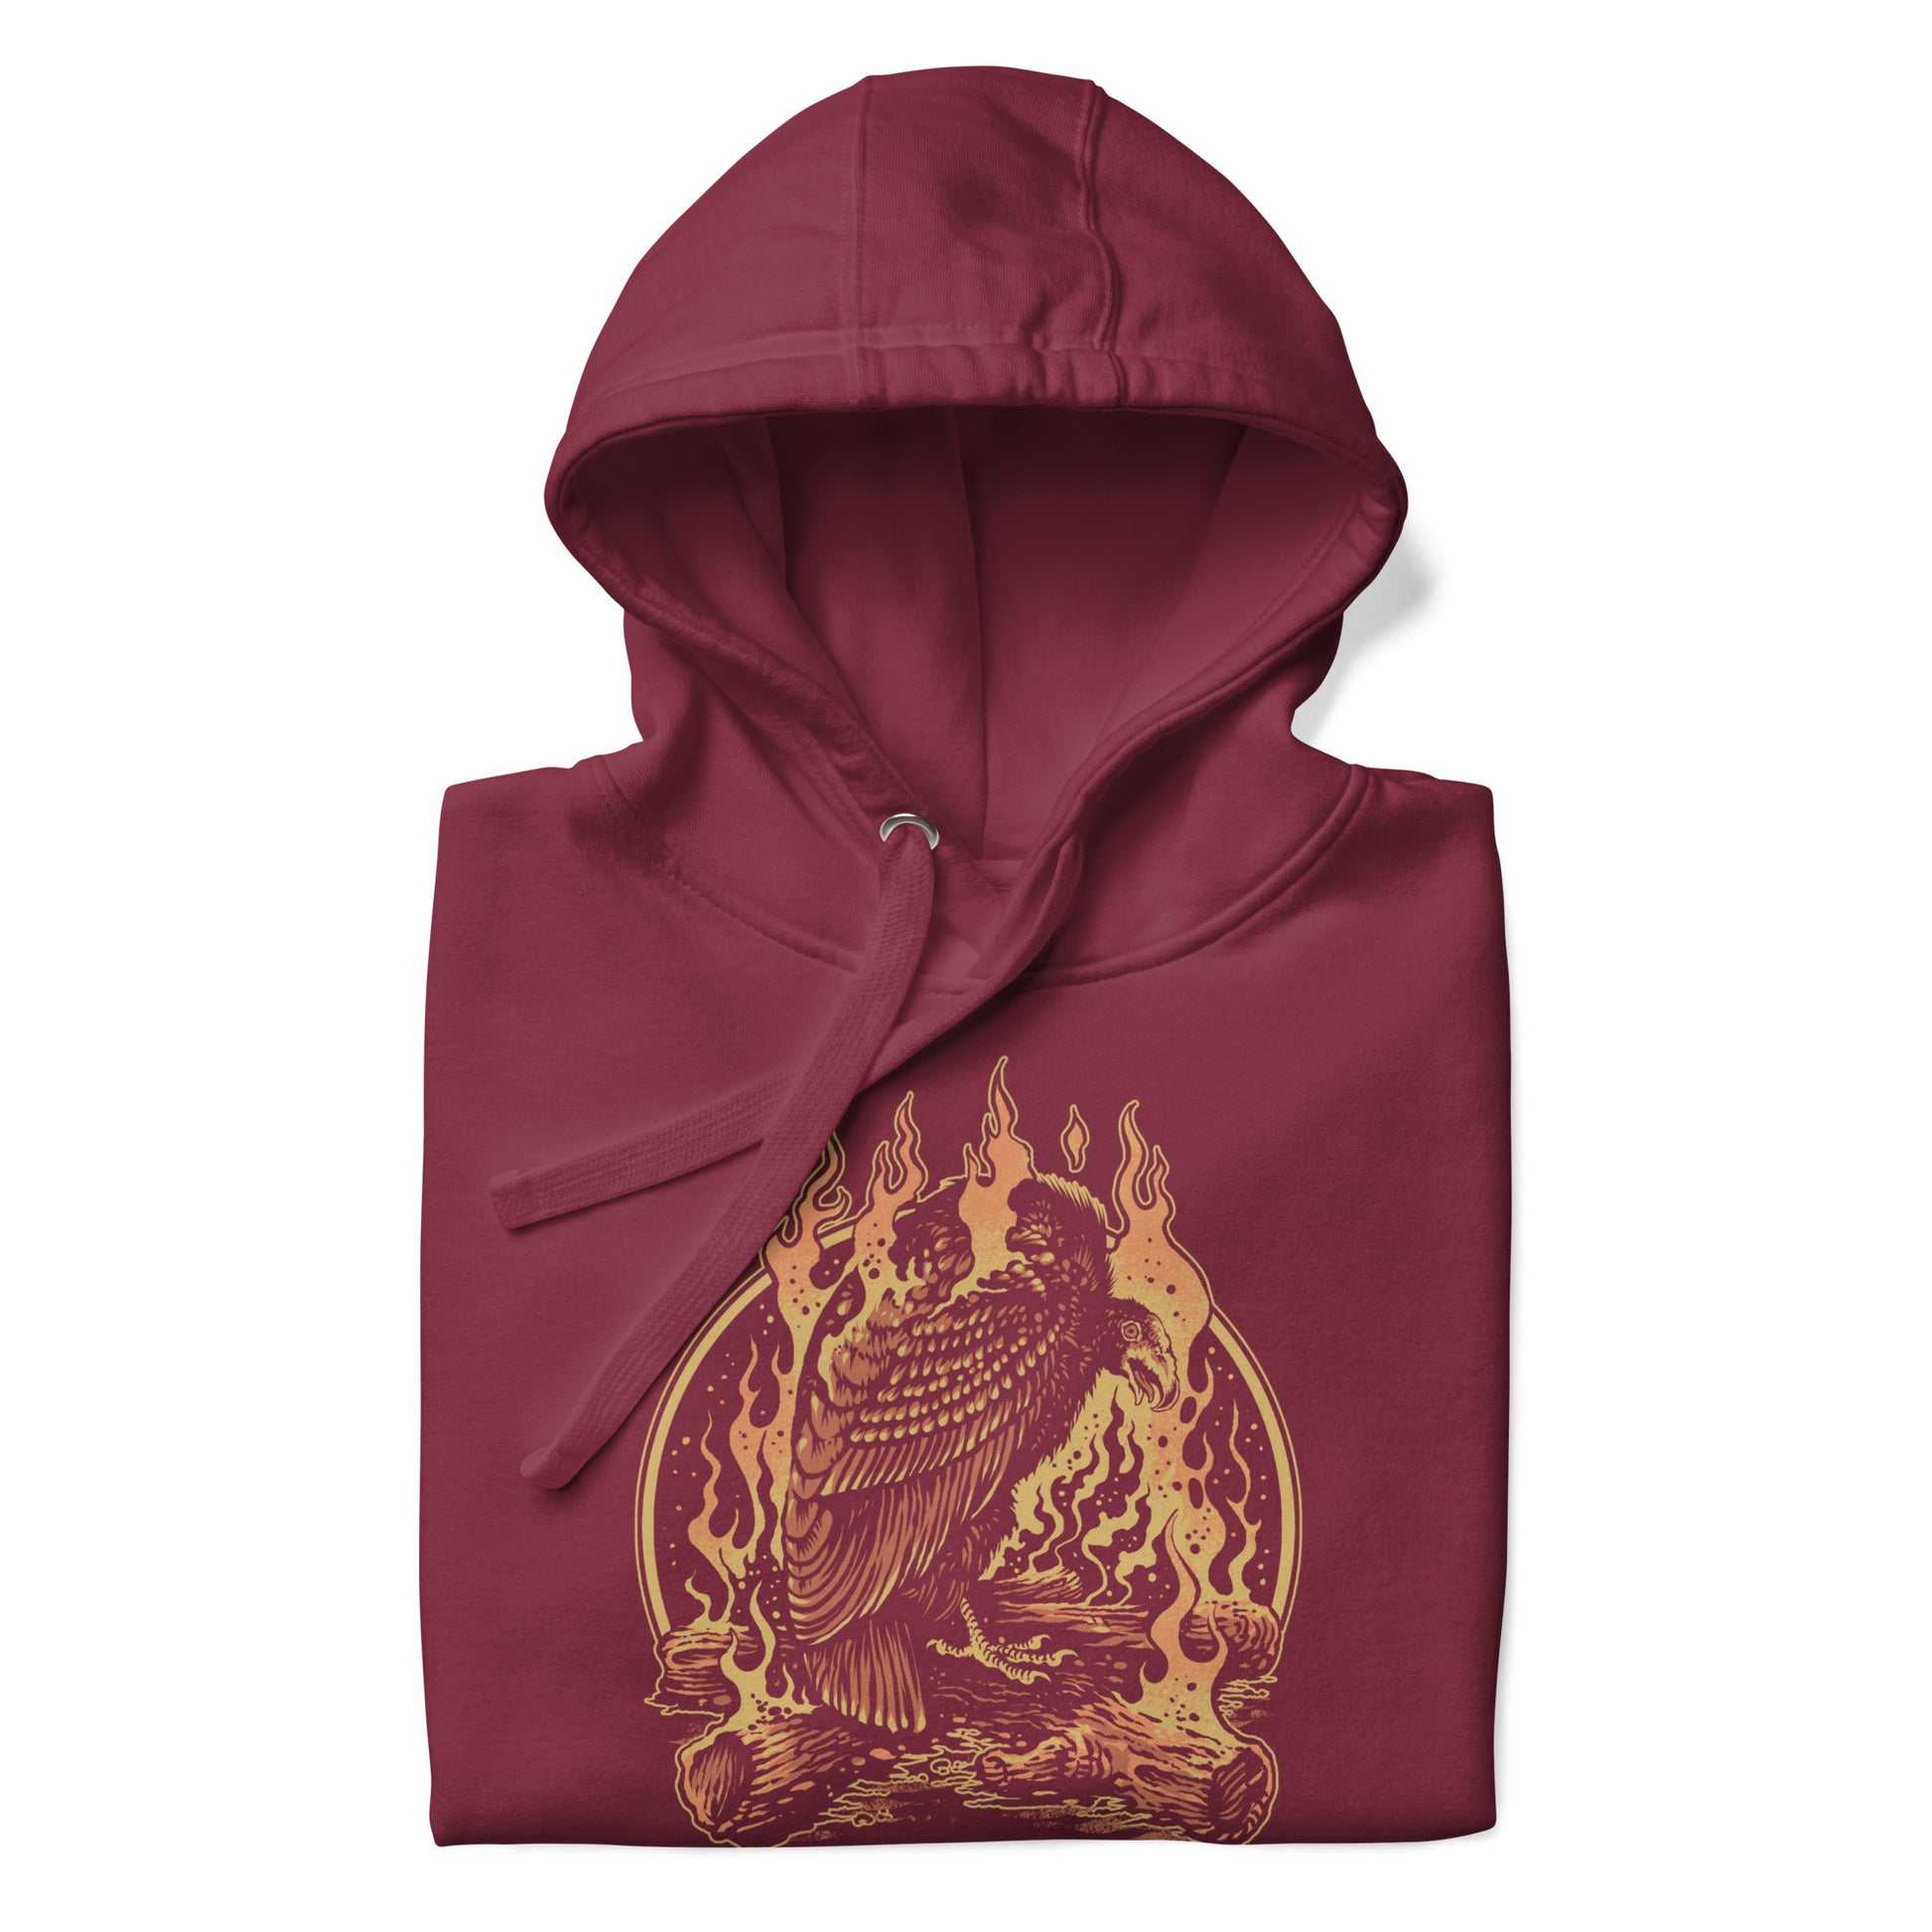 Wildfire Cigars Vulture maroon hoodie folded